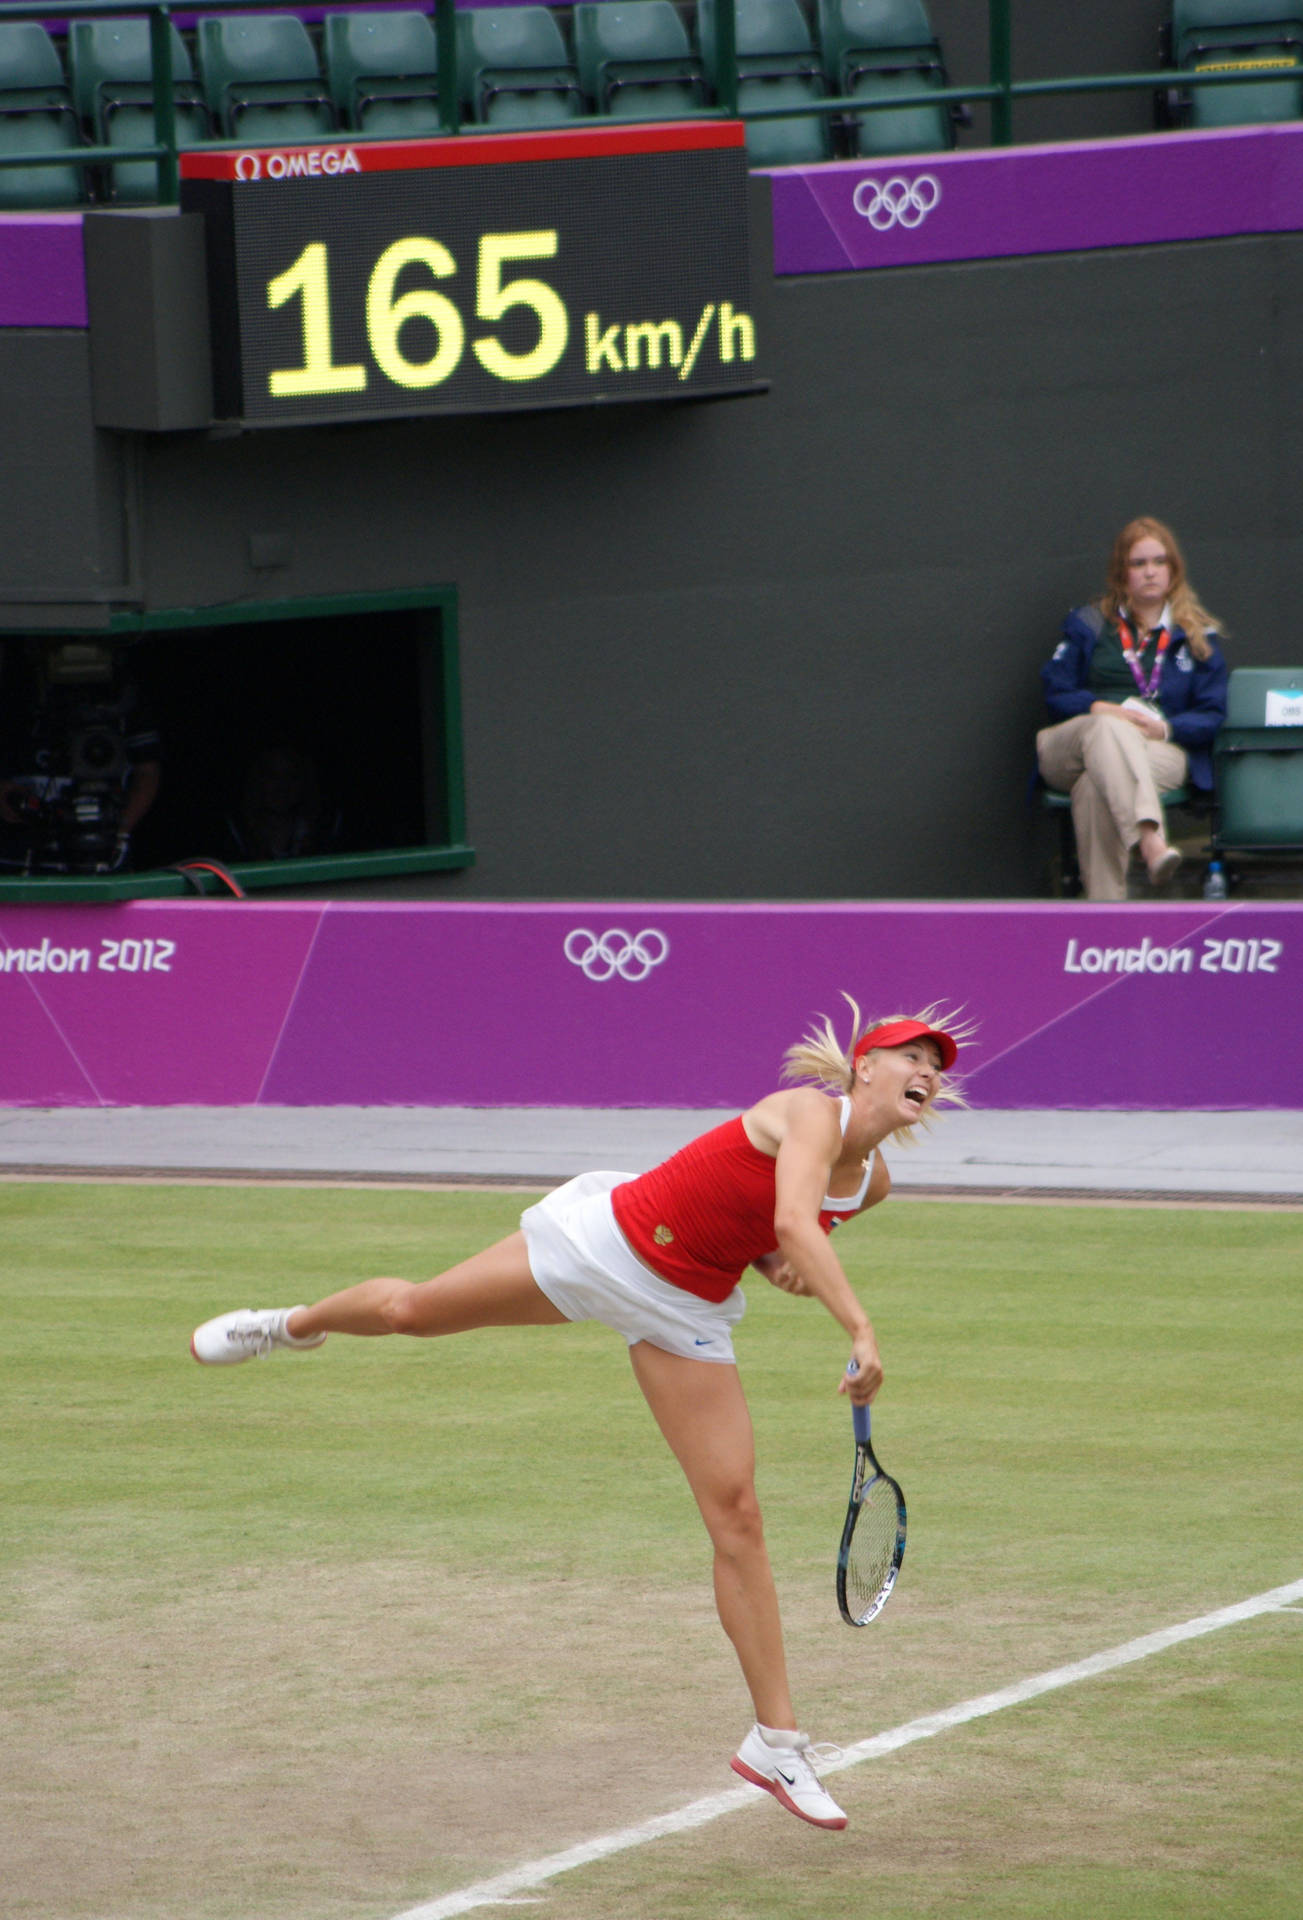 Wimbledon mester Maria Sharapova præger denne smukke tapet. Wallpaper